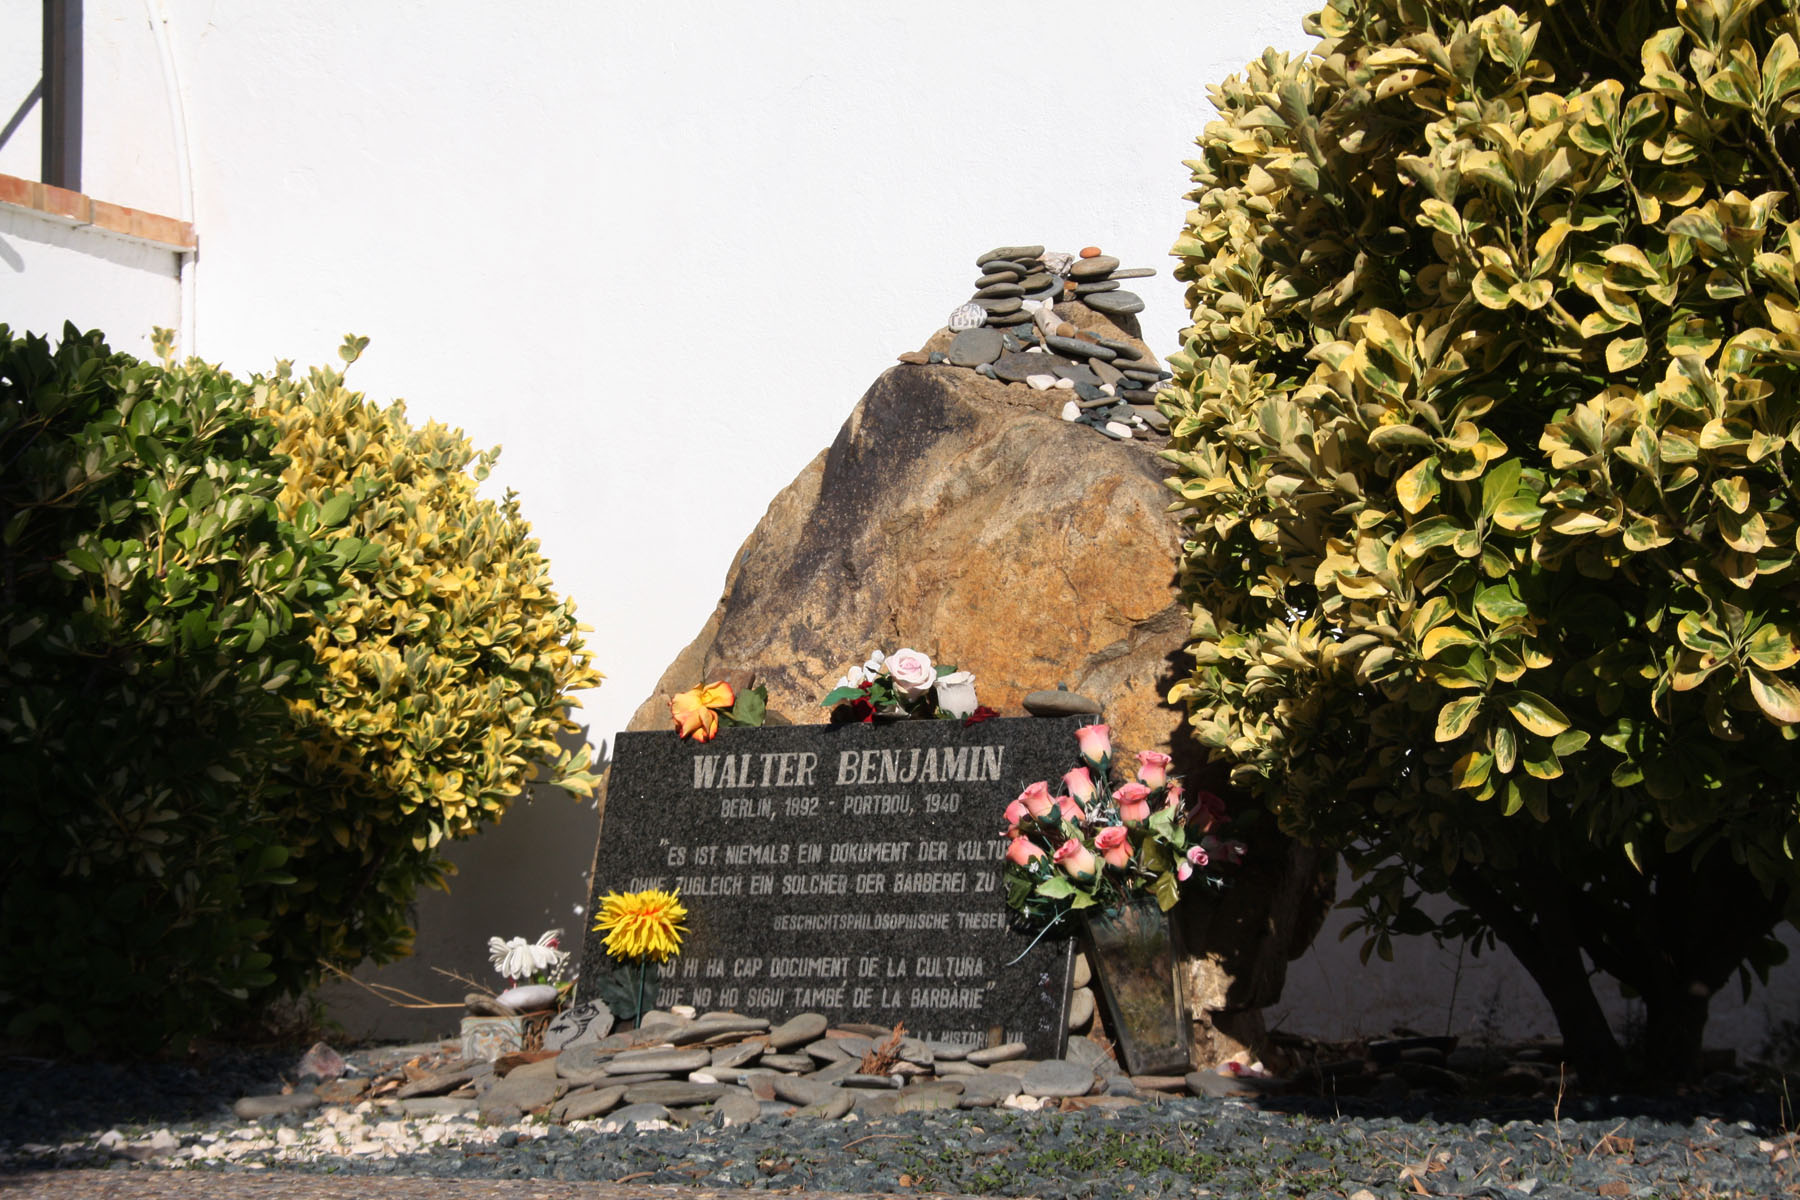 Part of the memorial dedicated to Walter Benjamin in Portbou in 2020 (by Mireia Recasens)